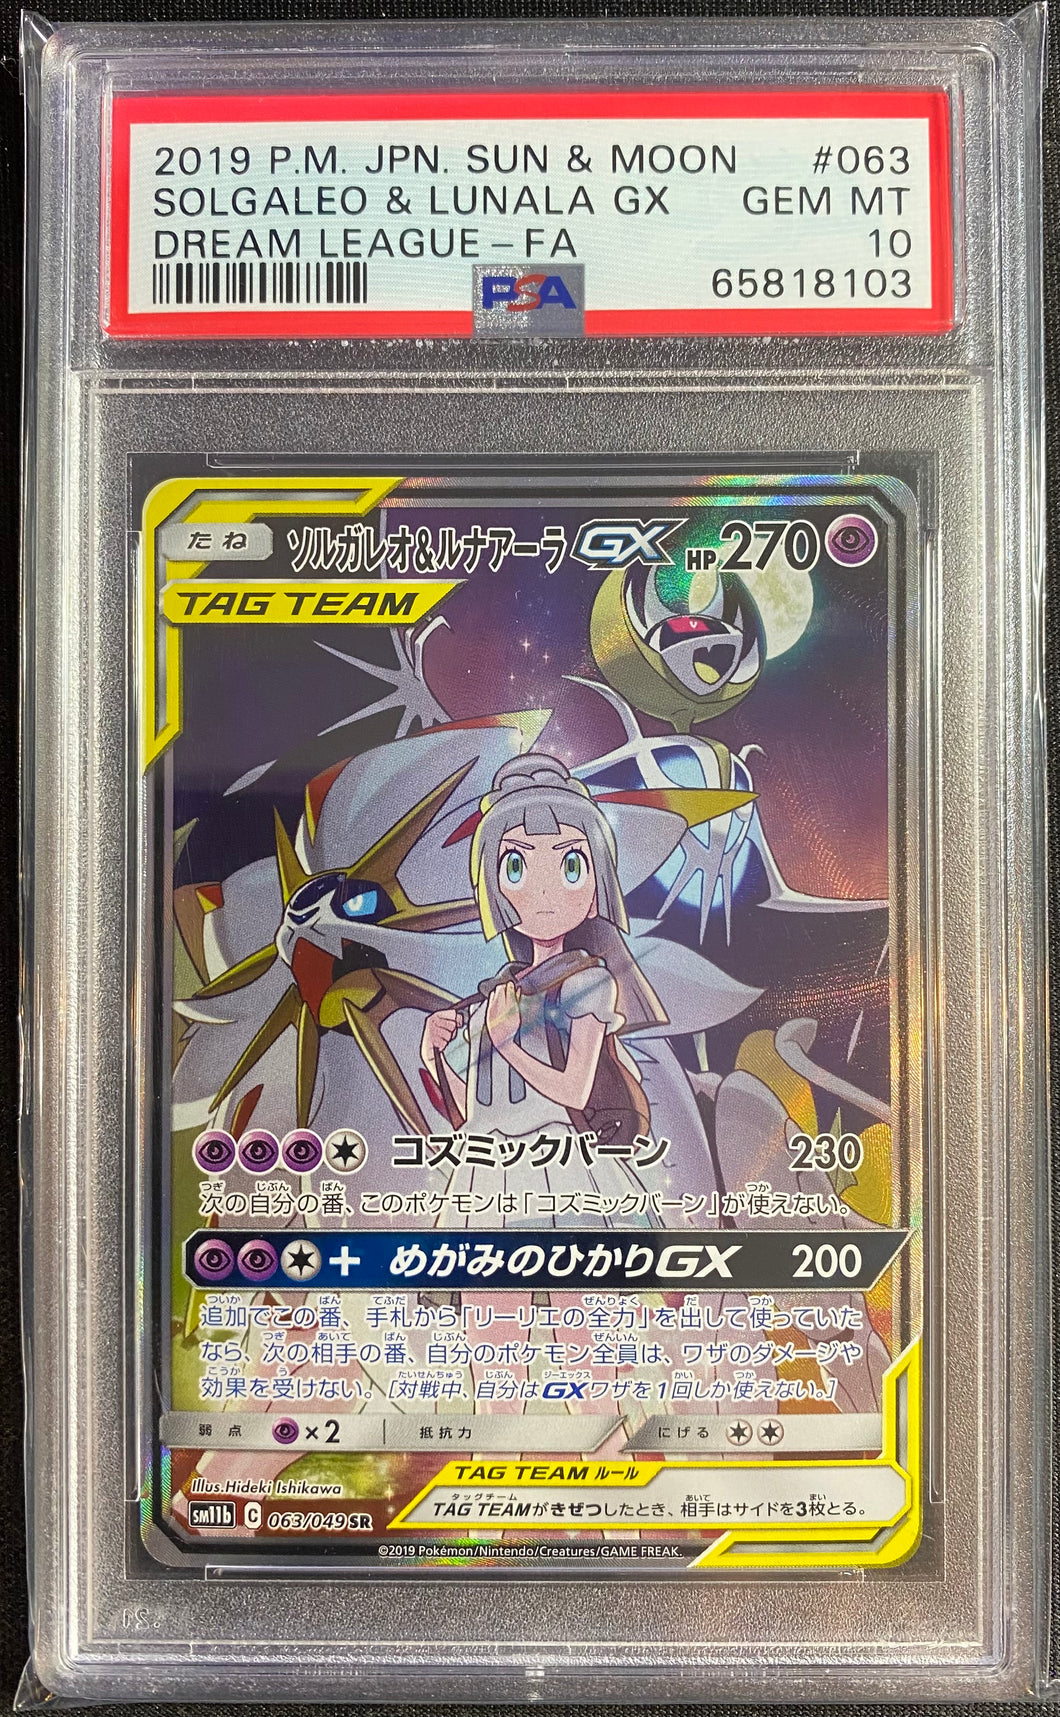 PSA 10 Japanese Pokémon Dream League Solgaleo and Lunala SR 063